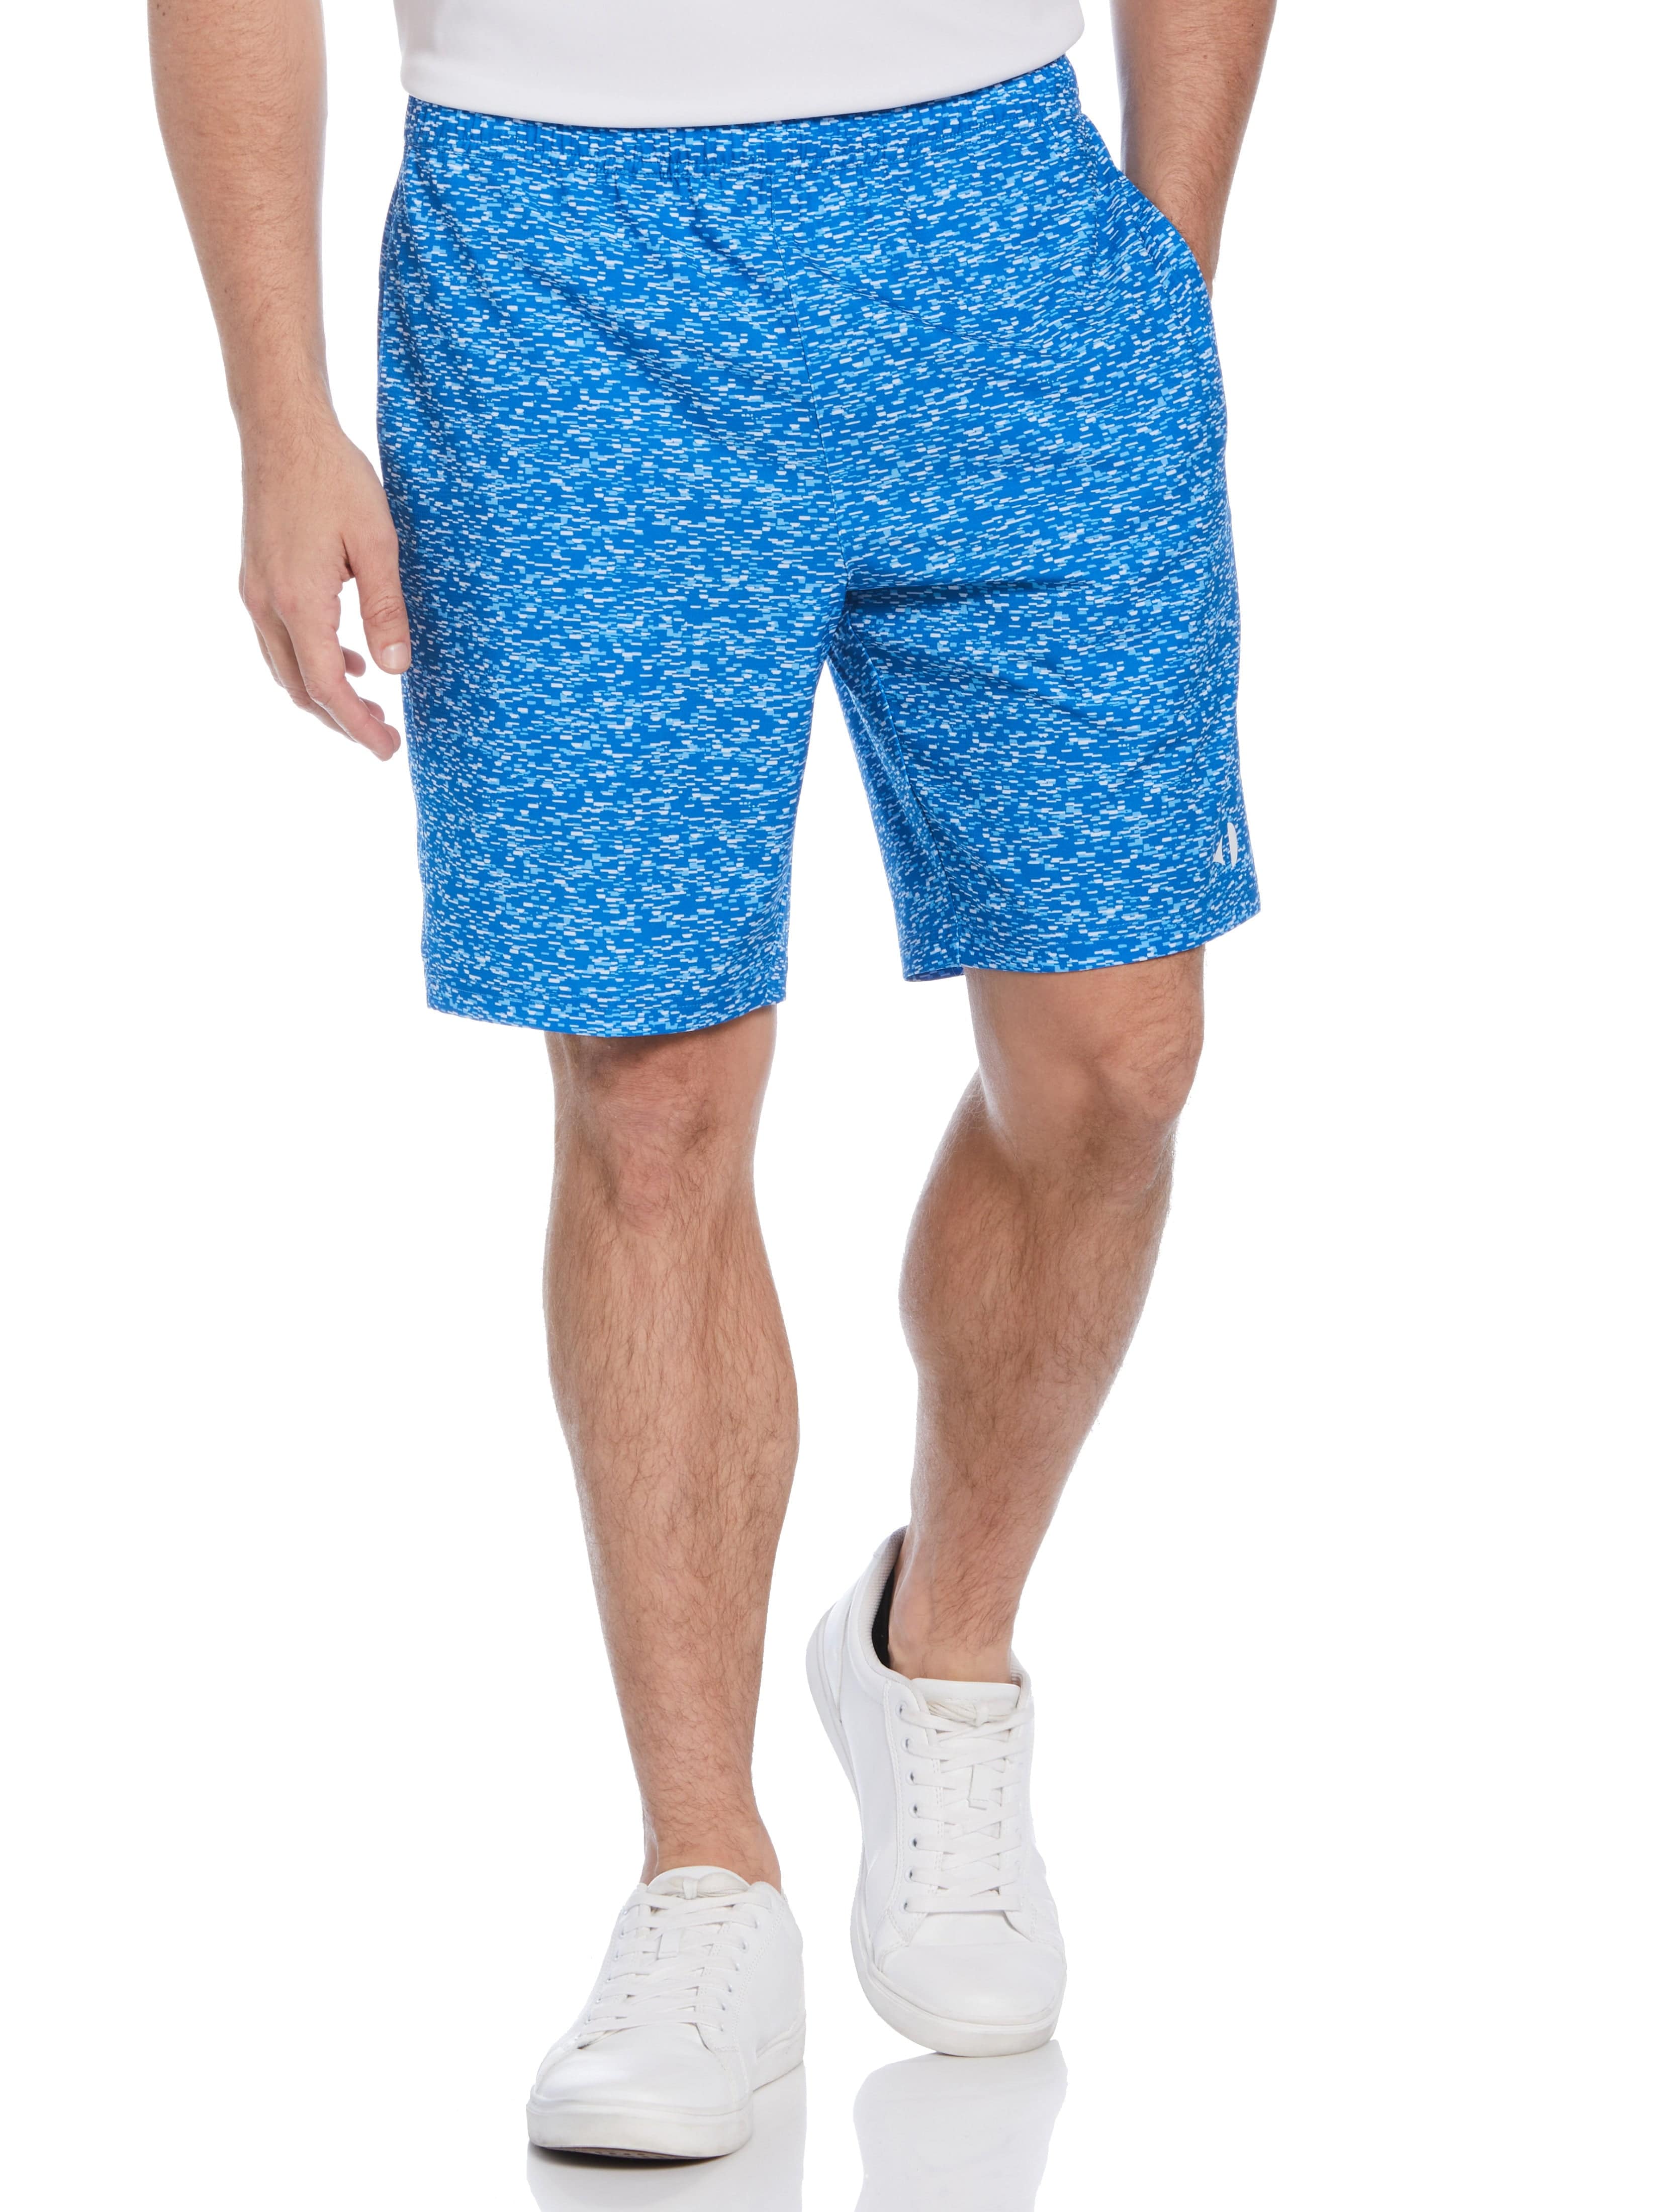 Grand Slam Mens Athletic Printed Tennis Short, Size Large, Egyptian Blue, Polyester/Elastane | Golf Apparel Shop